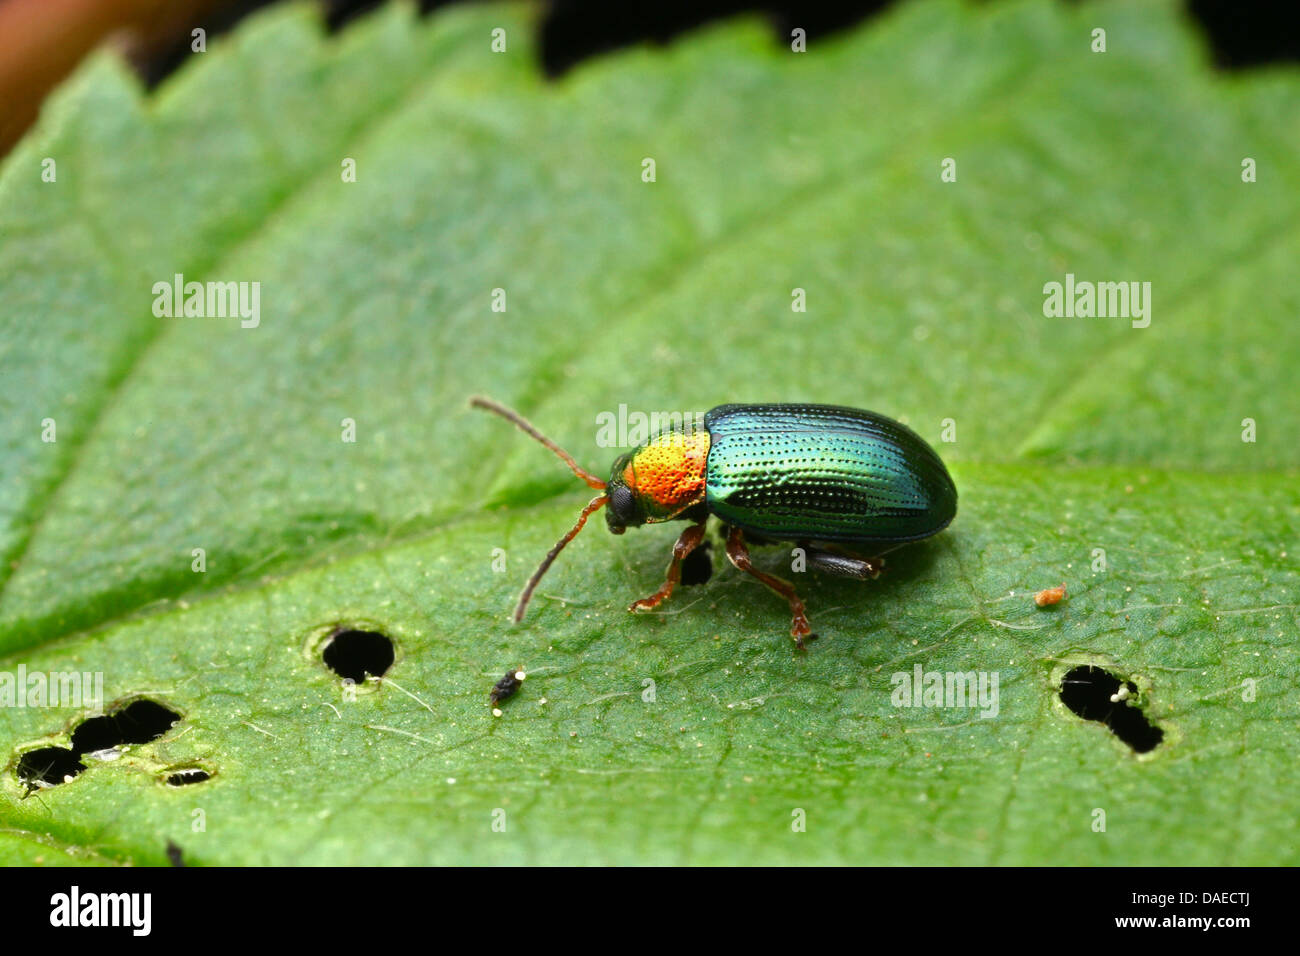 willow flea beetle (Crepidodera aurata), sitting on a leaf, Germany, Thueringen Stock Photo